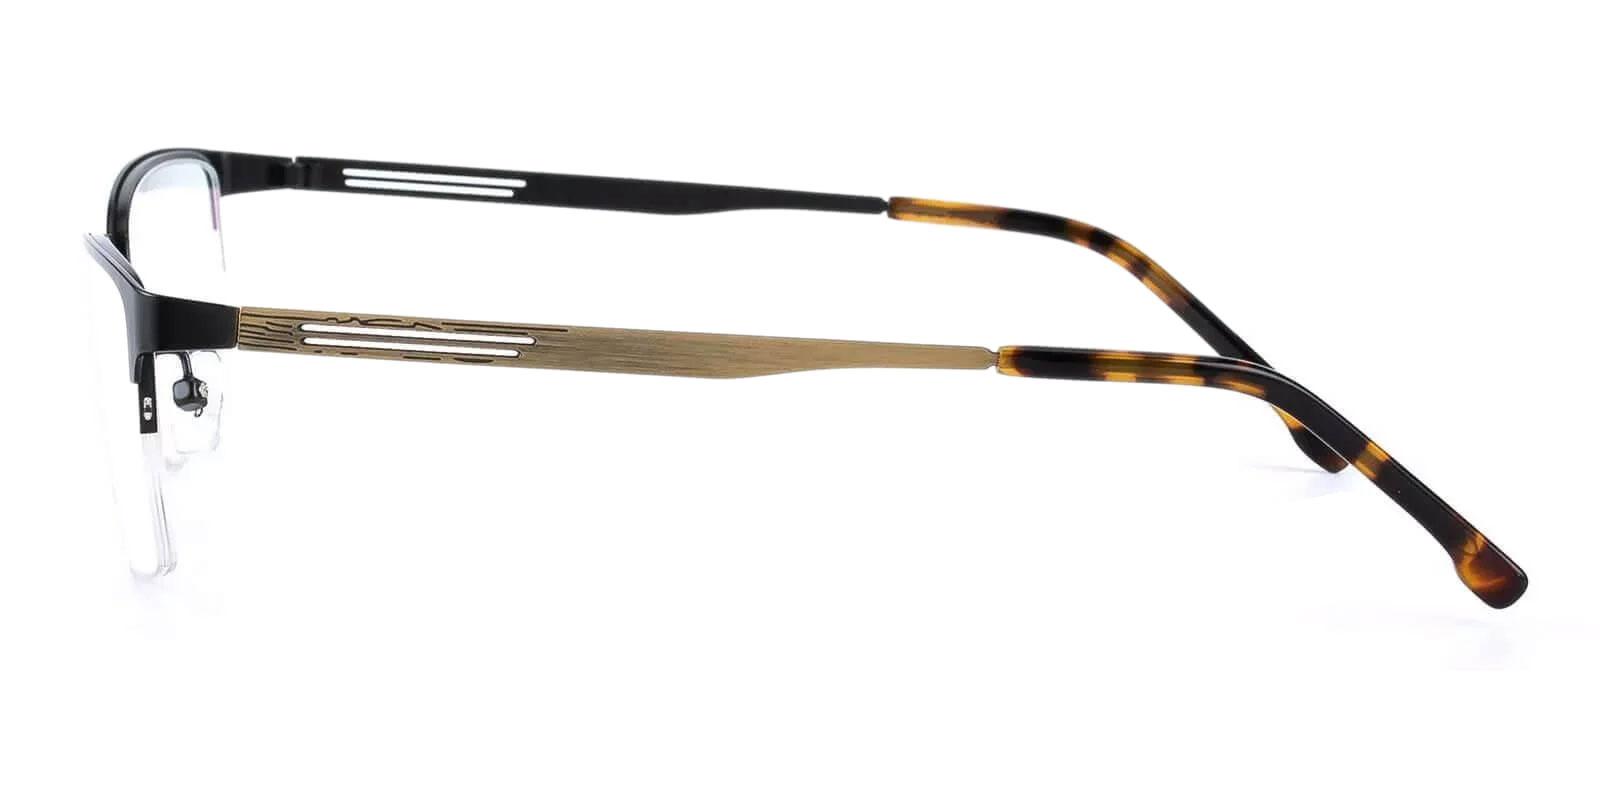 Gabriel Gold Metal Eyeglasses , NosePads Frames from ABBE Glasses